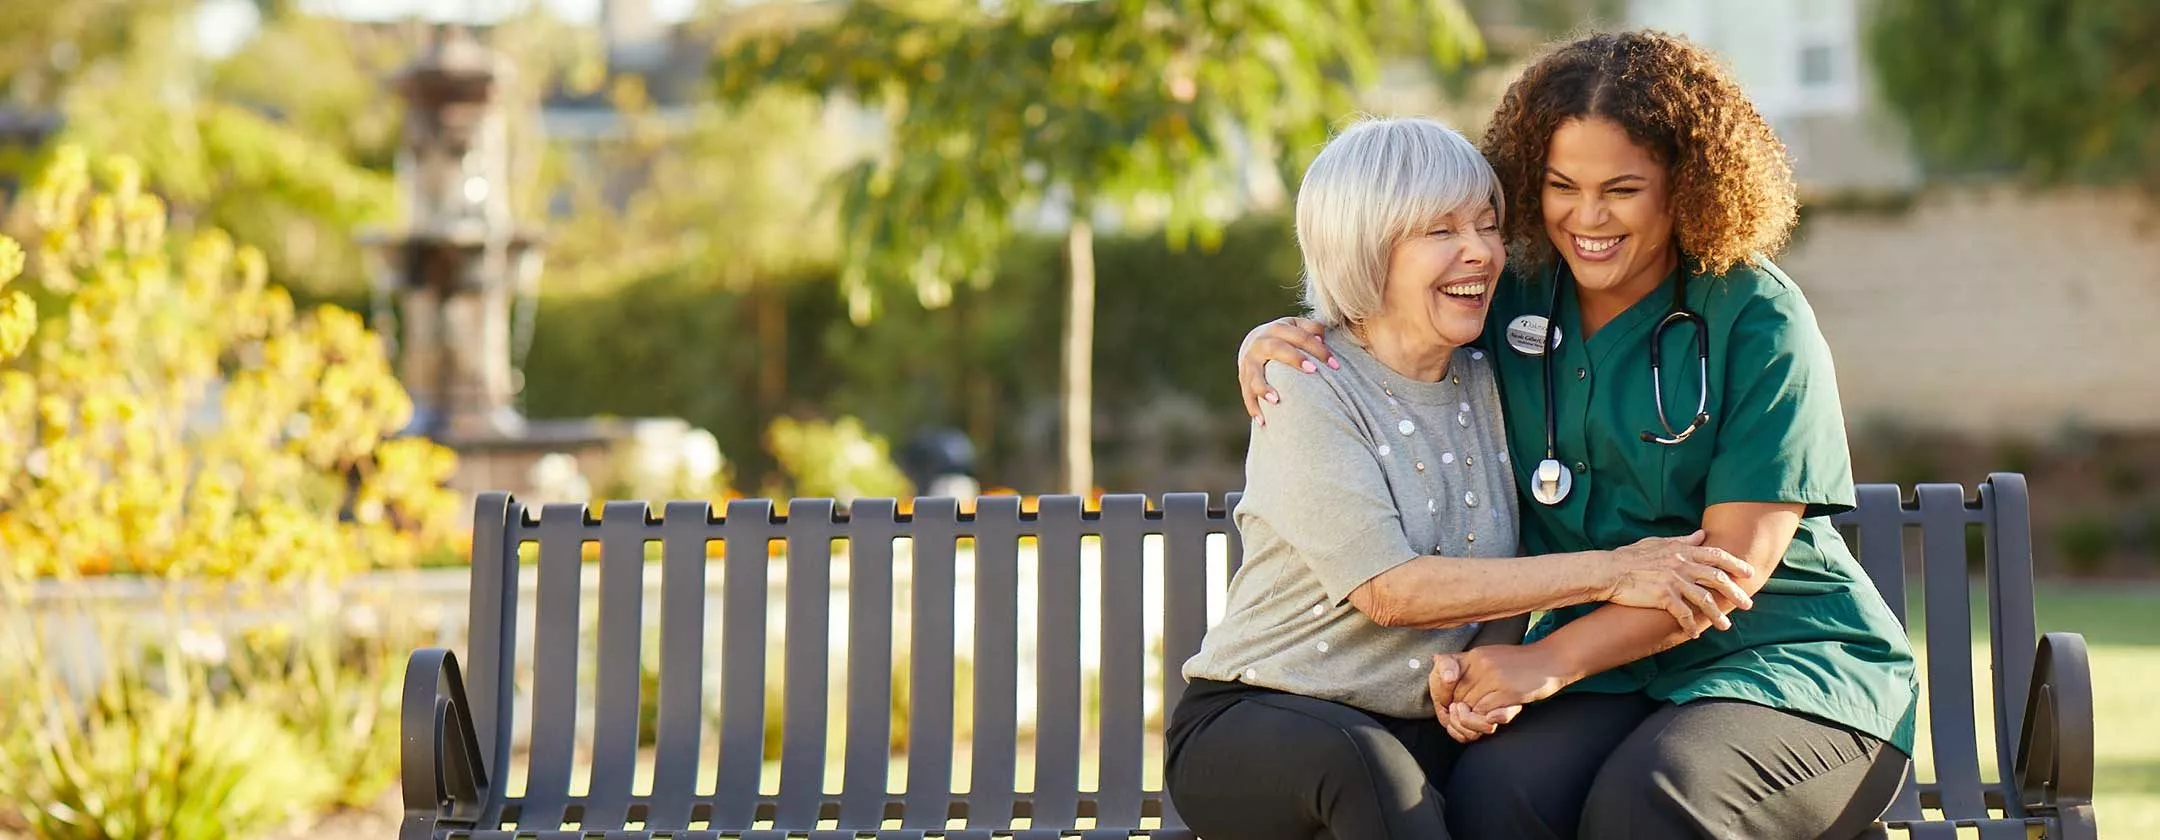 Caregiver embraces senior woman on a bench